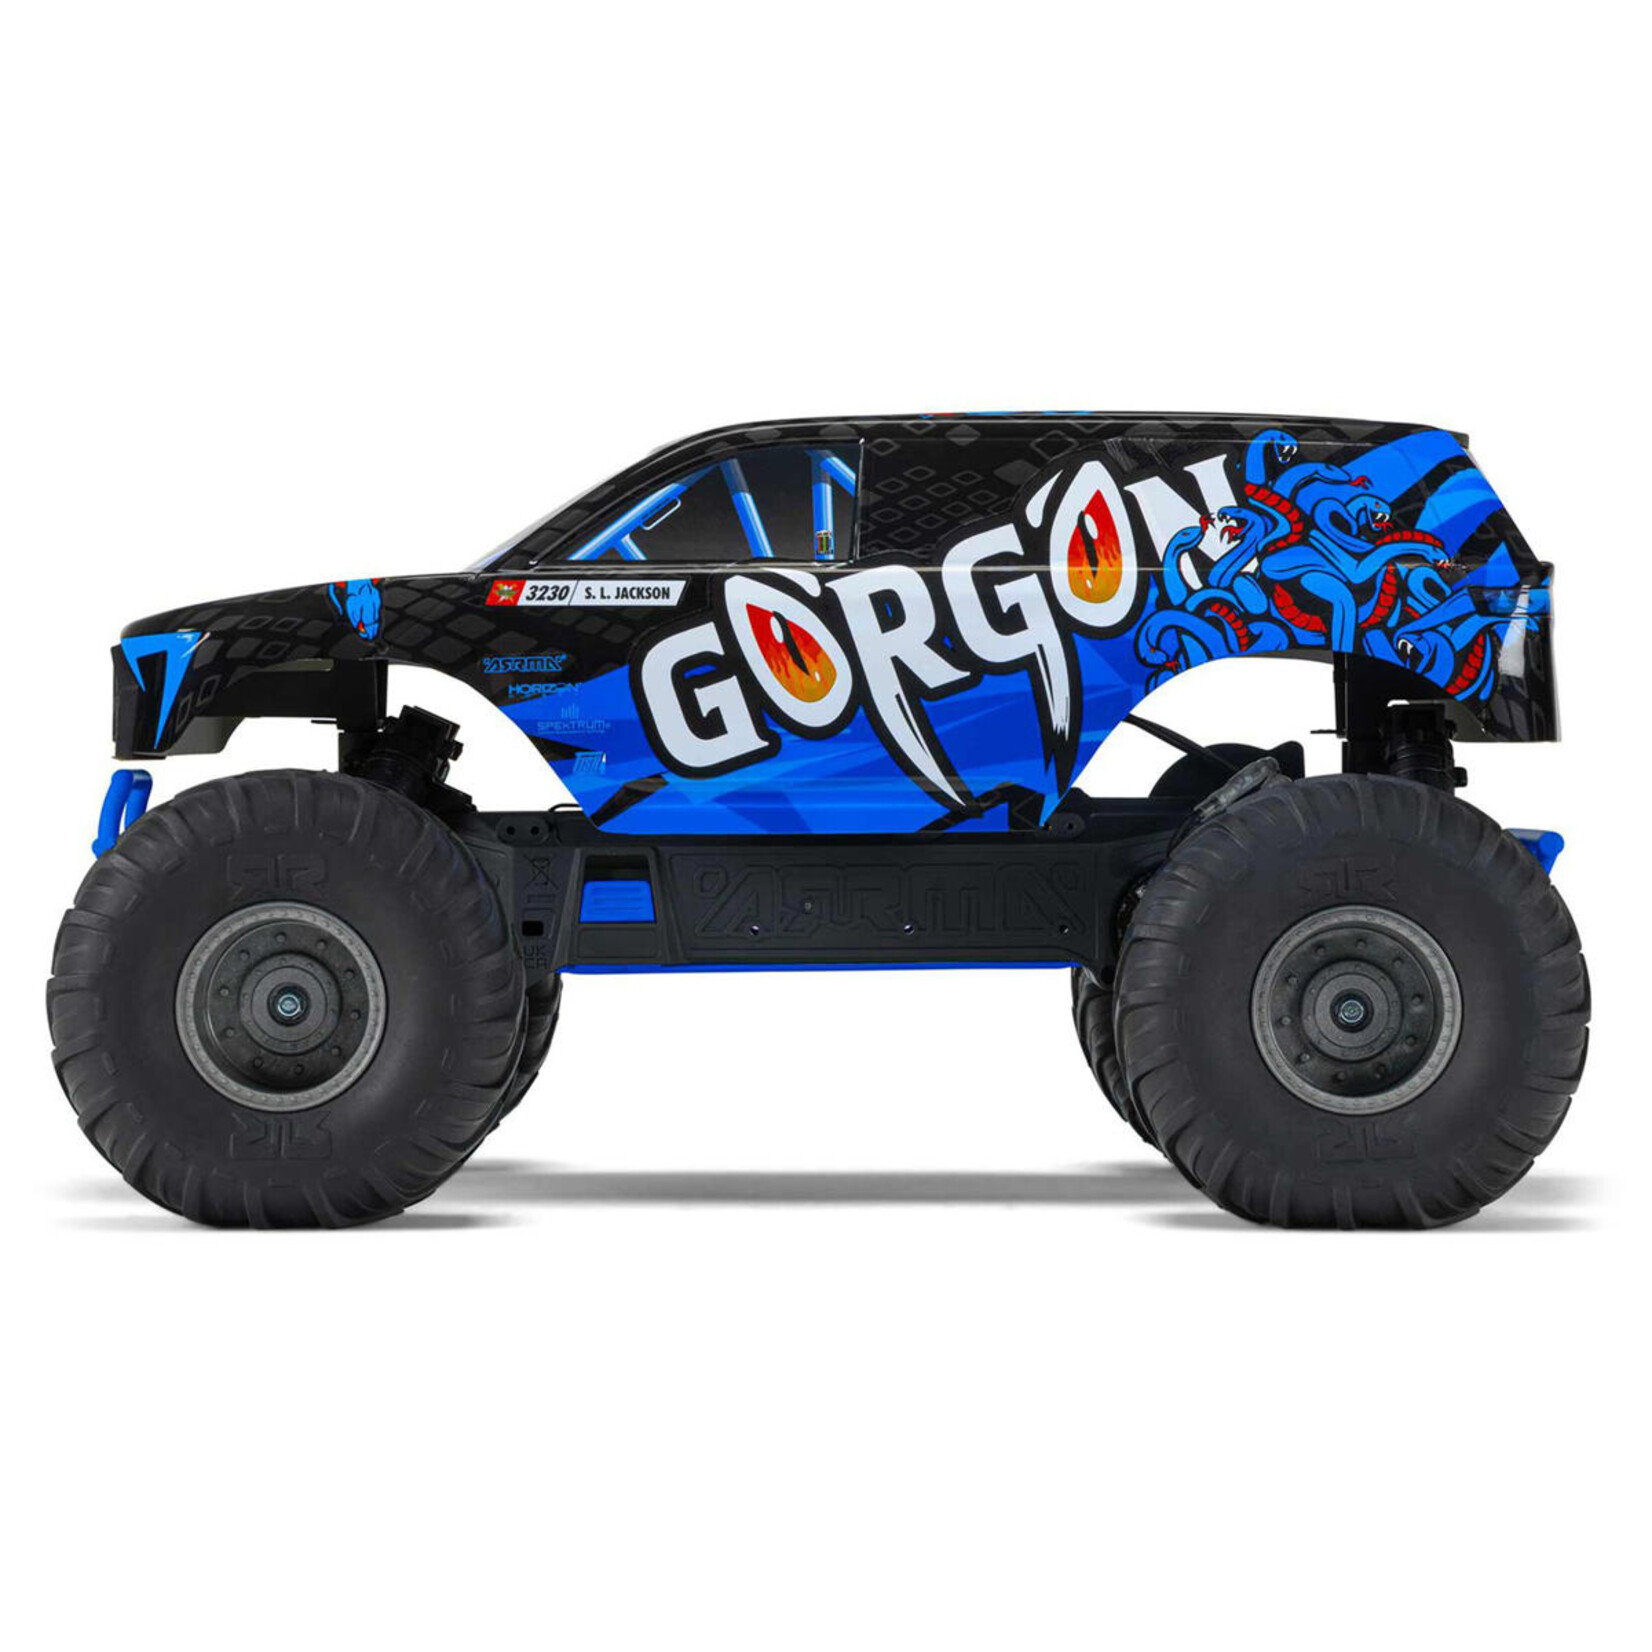 ARRMA Arrma Gorgon 4X2 MEGA 550 Brushed 1/10 Monster Truck RTR (Blue) w/SLT2 2.4GHz Radio #ARA3230T1